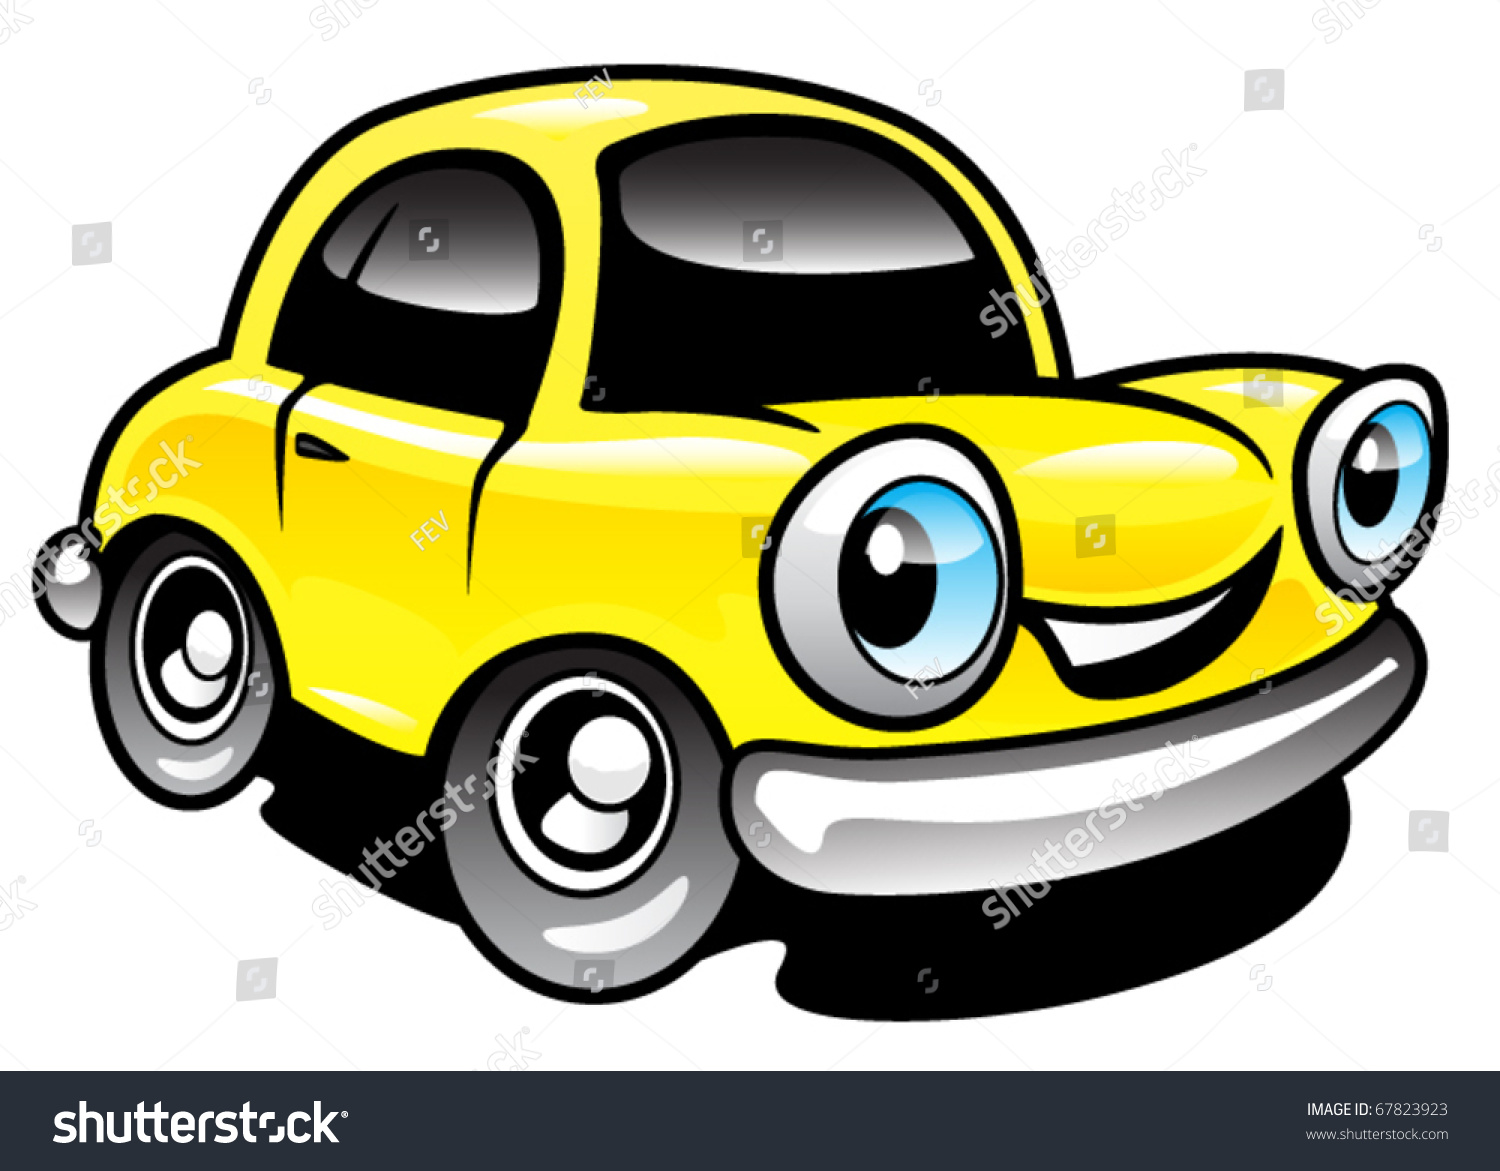 Cartoon Car Stock Vector 67823923 - Shutterstock